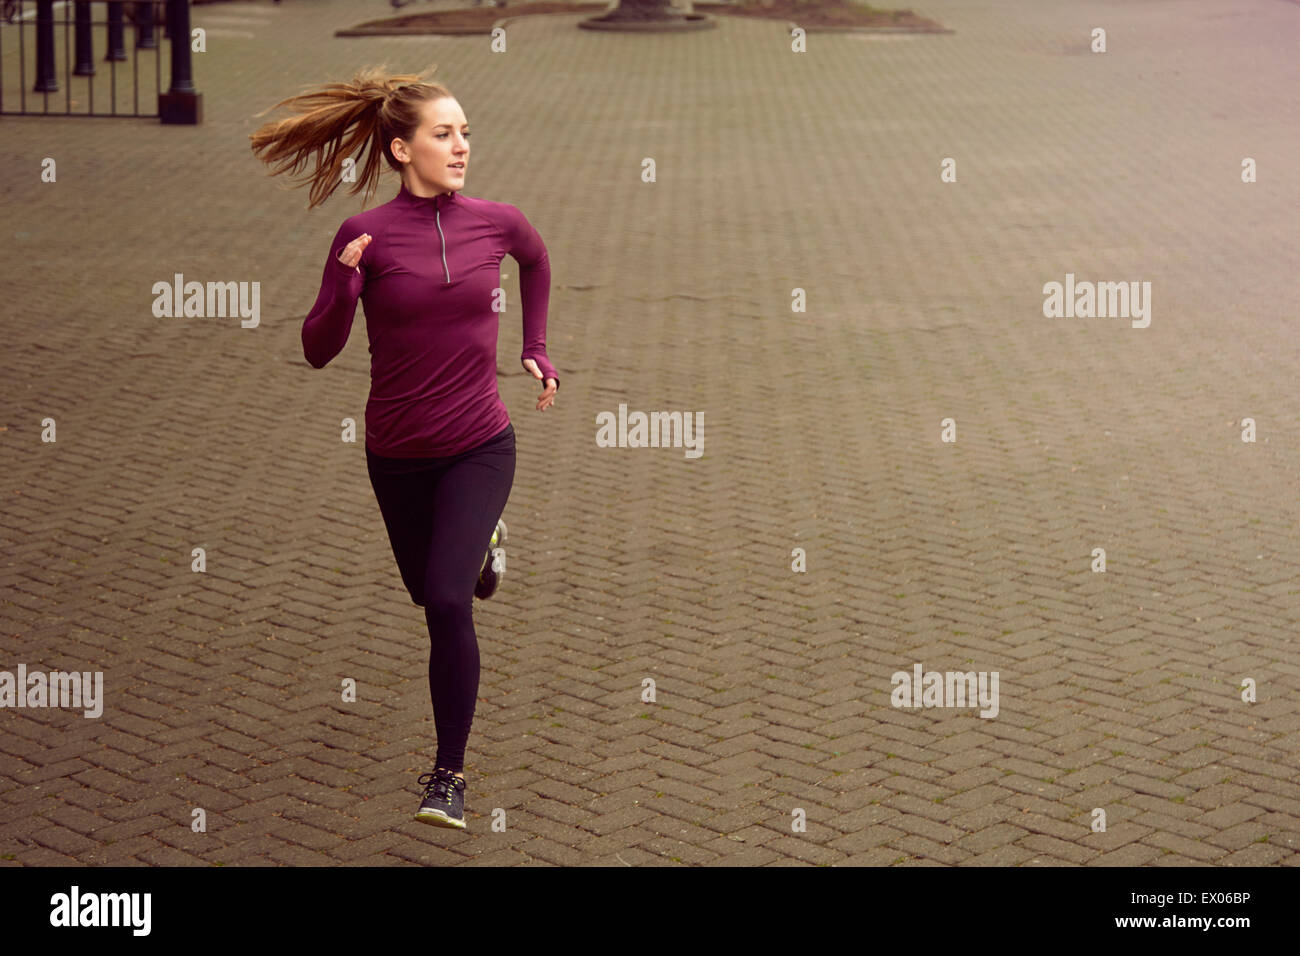 Young woman running along sidewalk Stock Photo